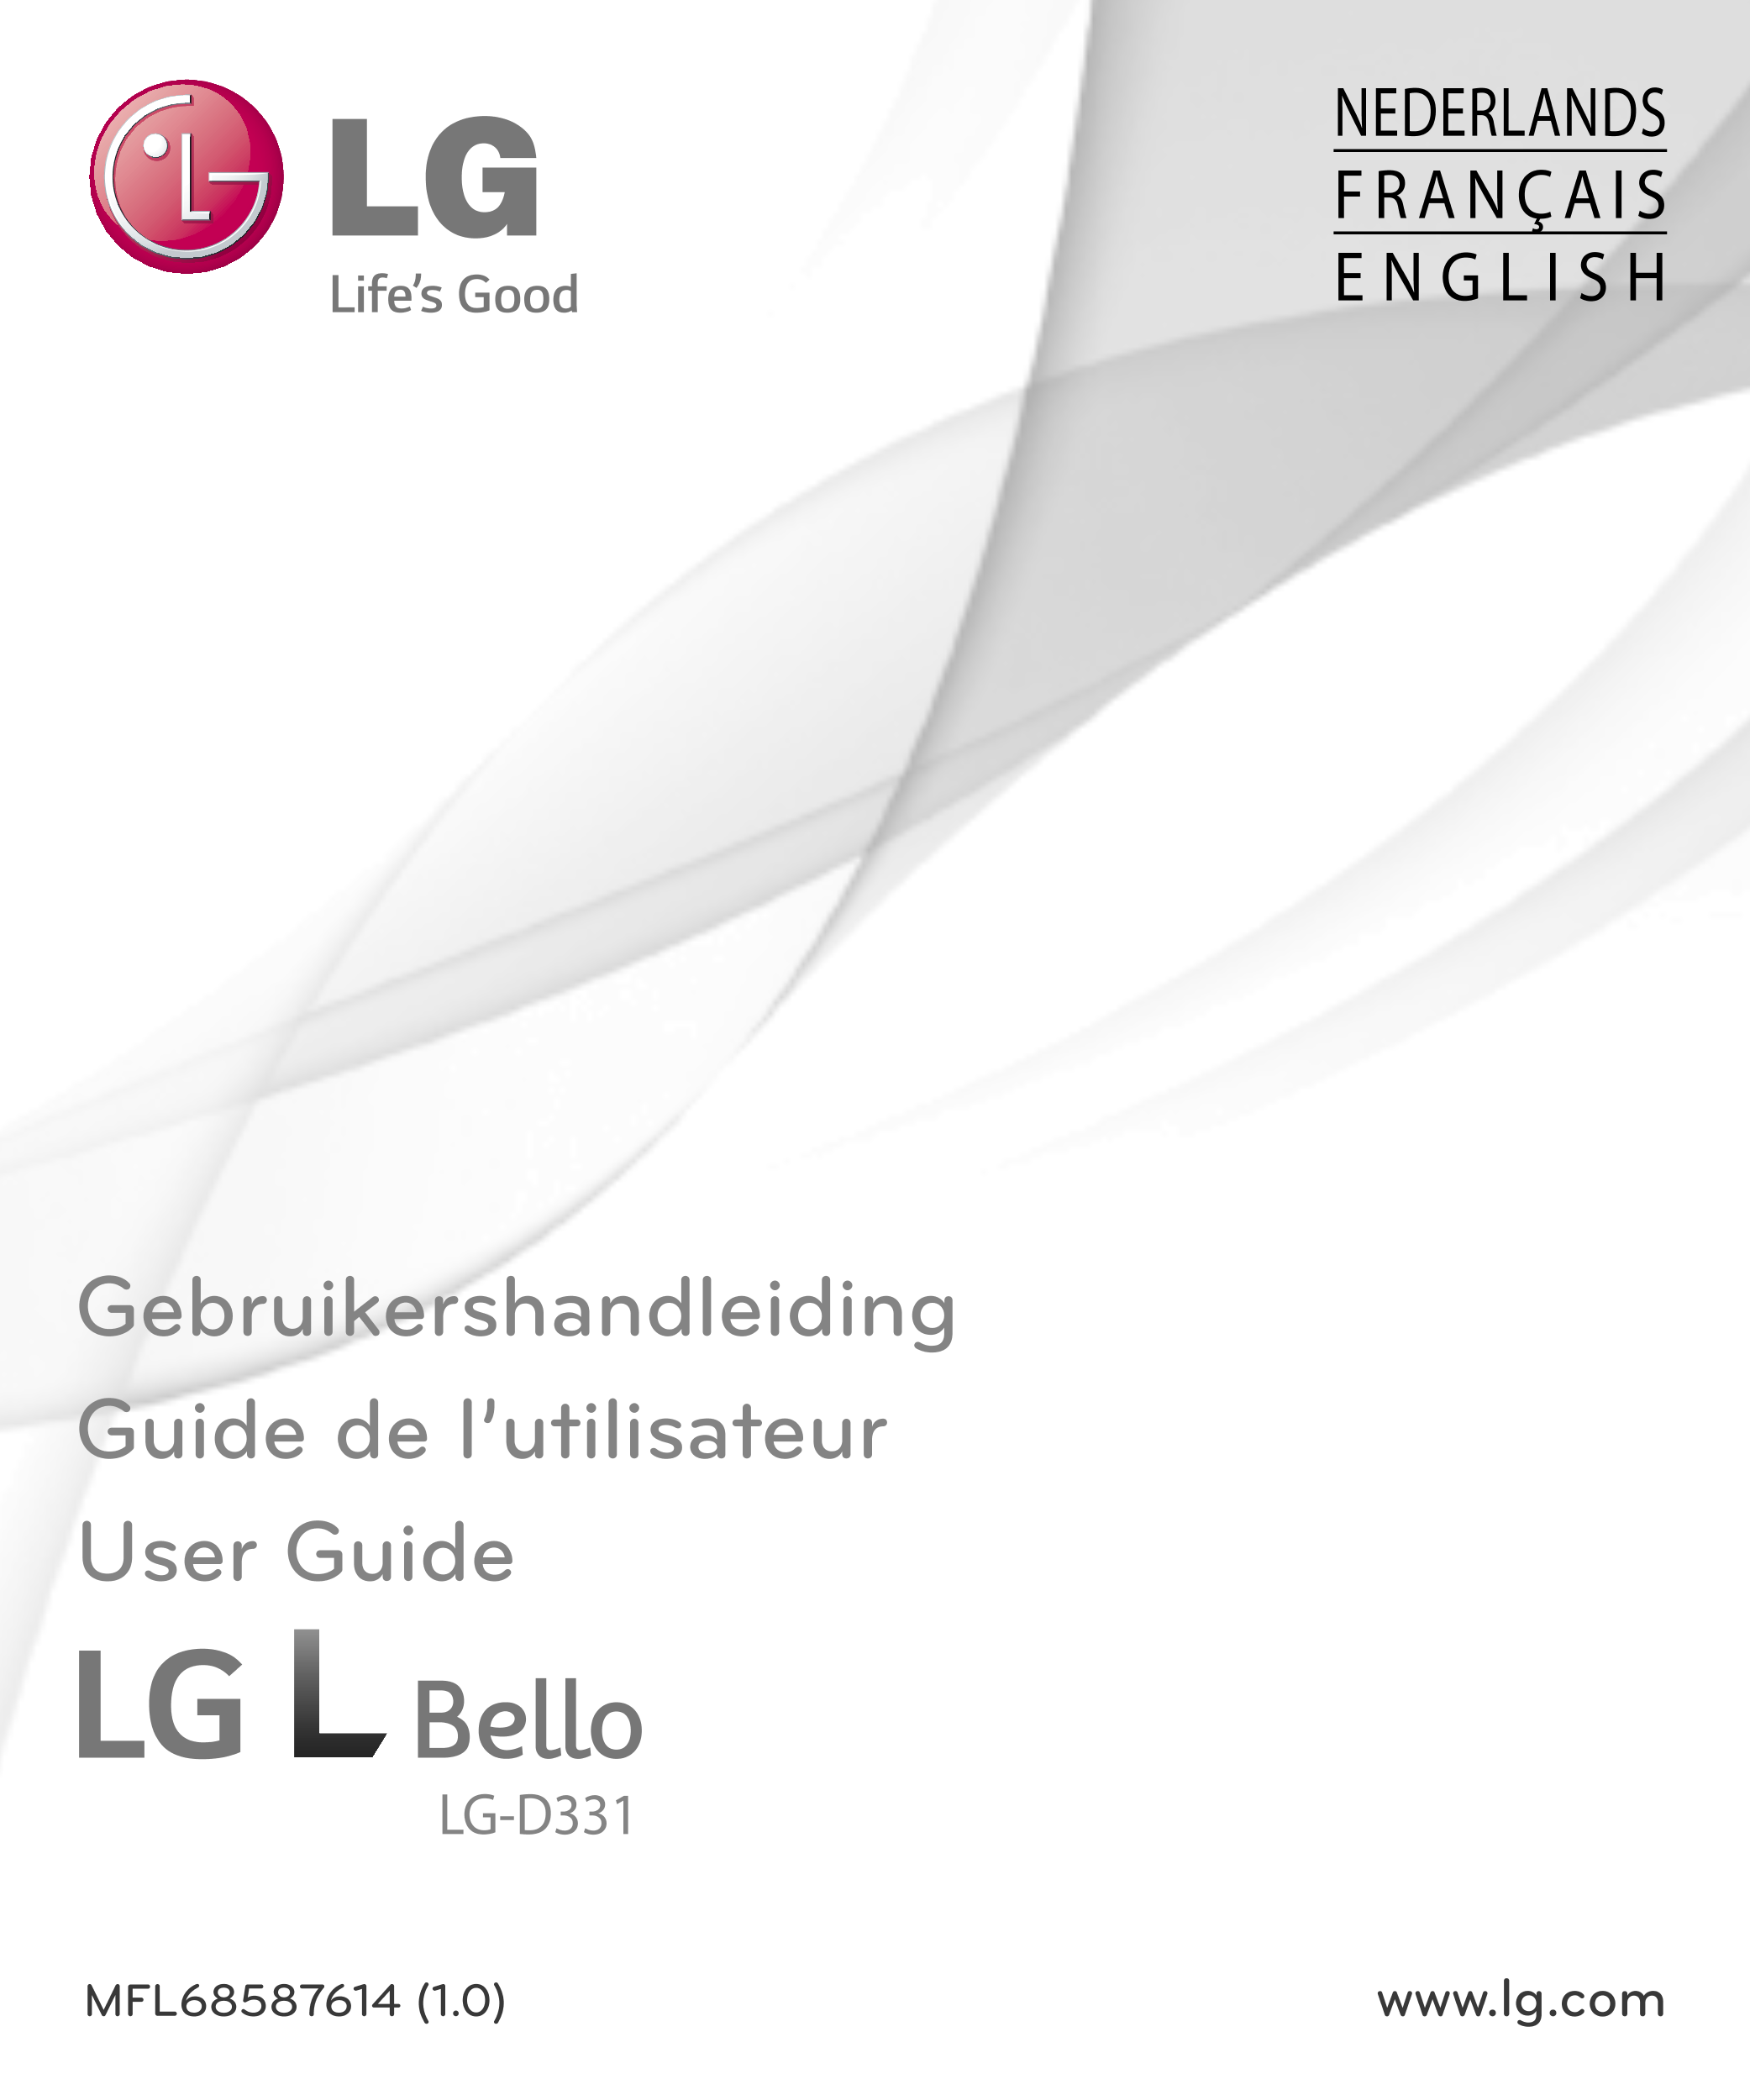 NEDERLANDS
FRANÇAIS
E N G L I S H
Gebruikershandleiding
Guide de l’utilisateur
User Guide
LG-D331
MFL68587614 (1.0)  www.lg.com